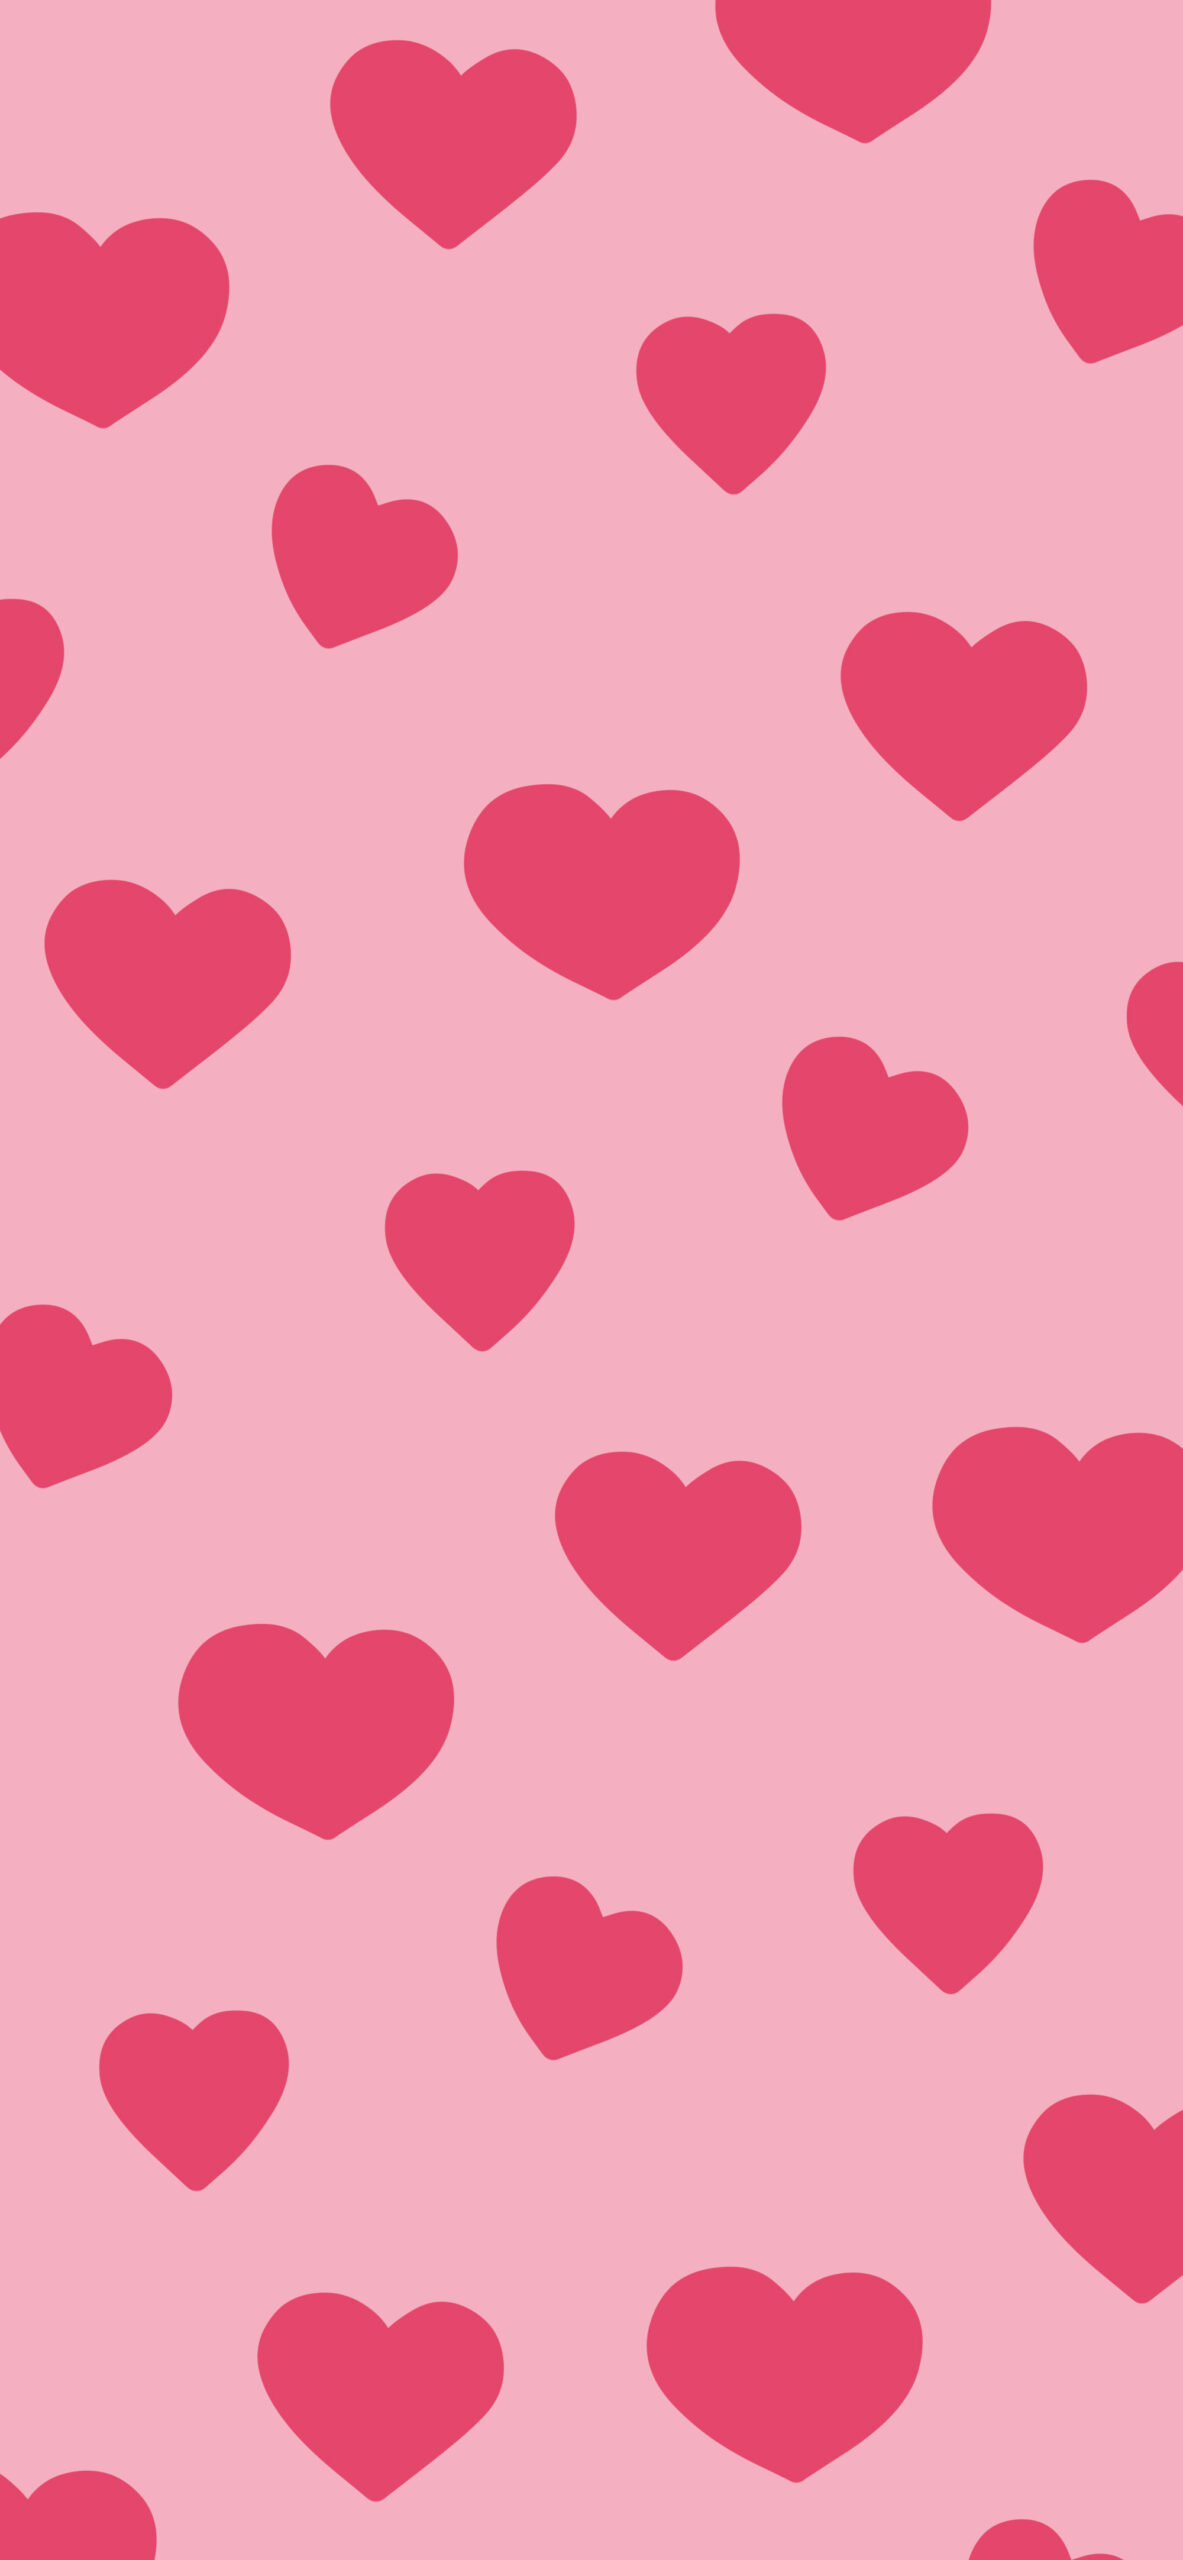 Heart's in love | Valentines wallpaper, Love wallpaper, Love wallpaper  backgrounds